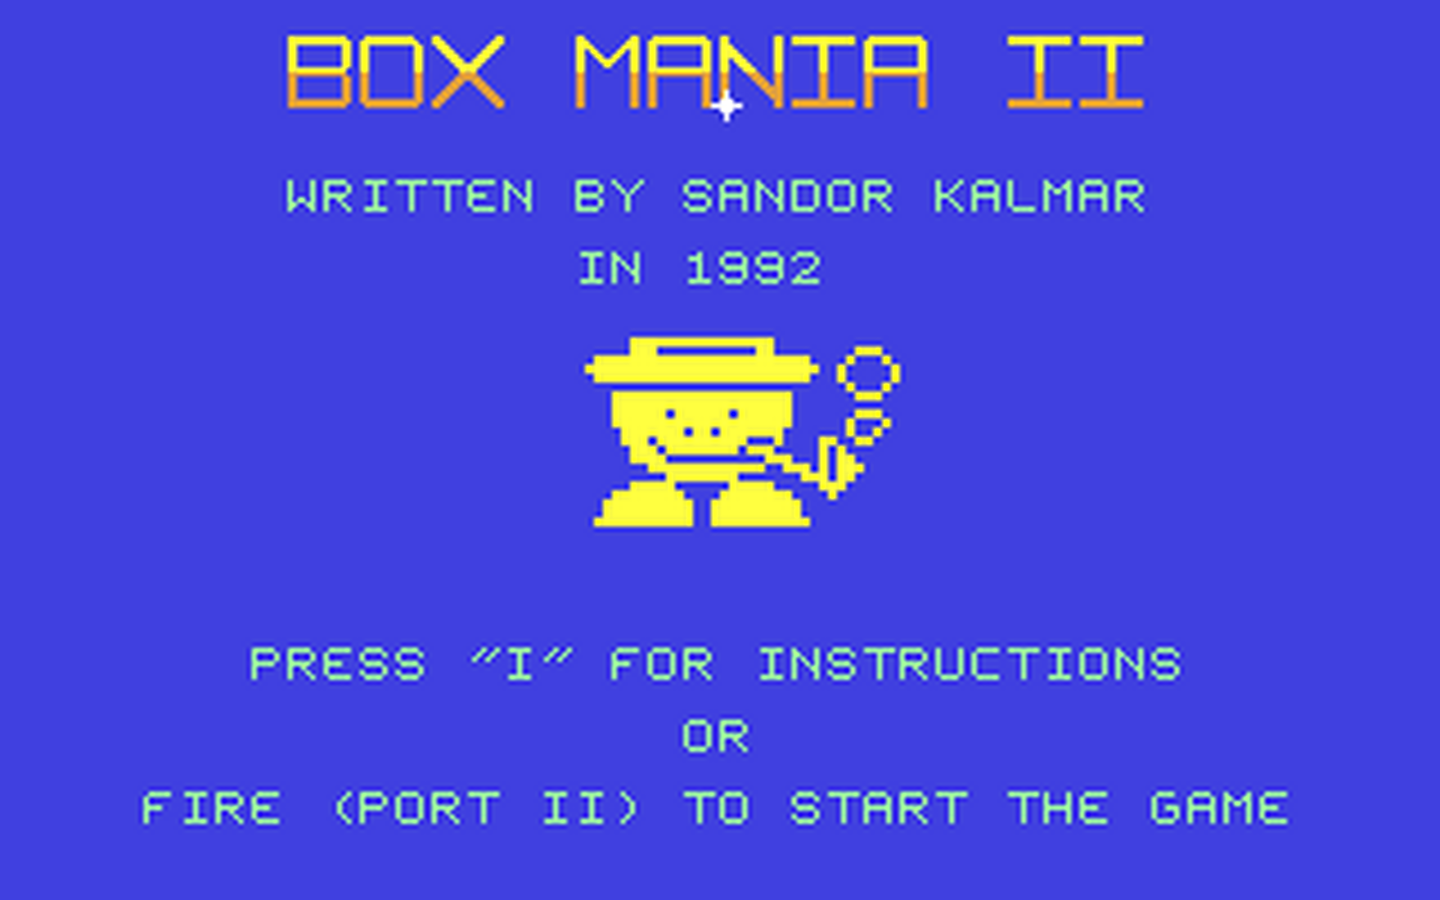 C64 GameBase Box_Mania_II 1992